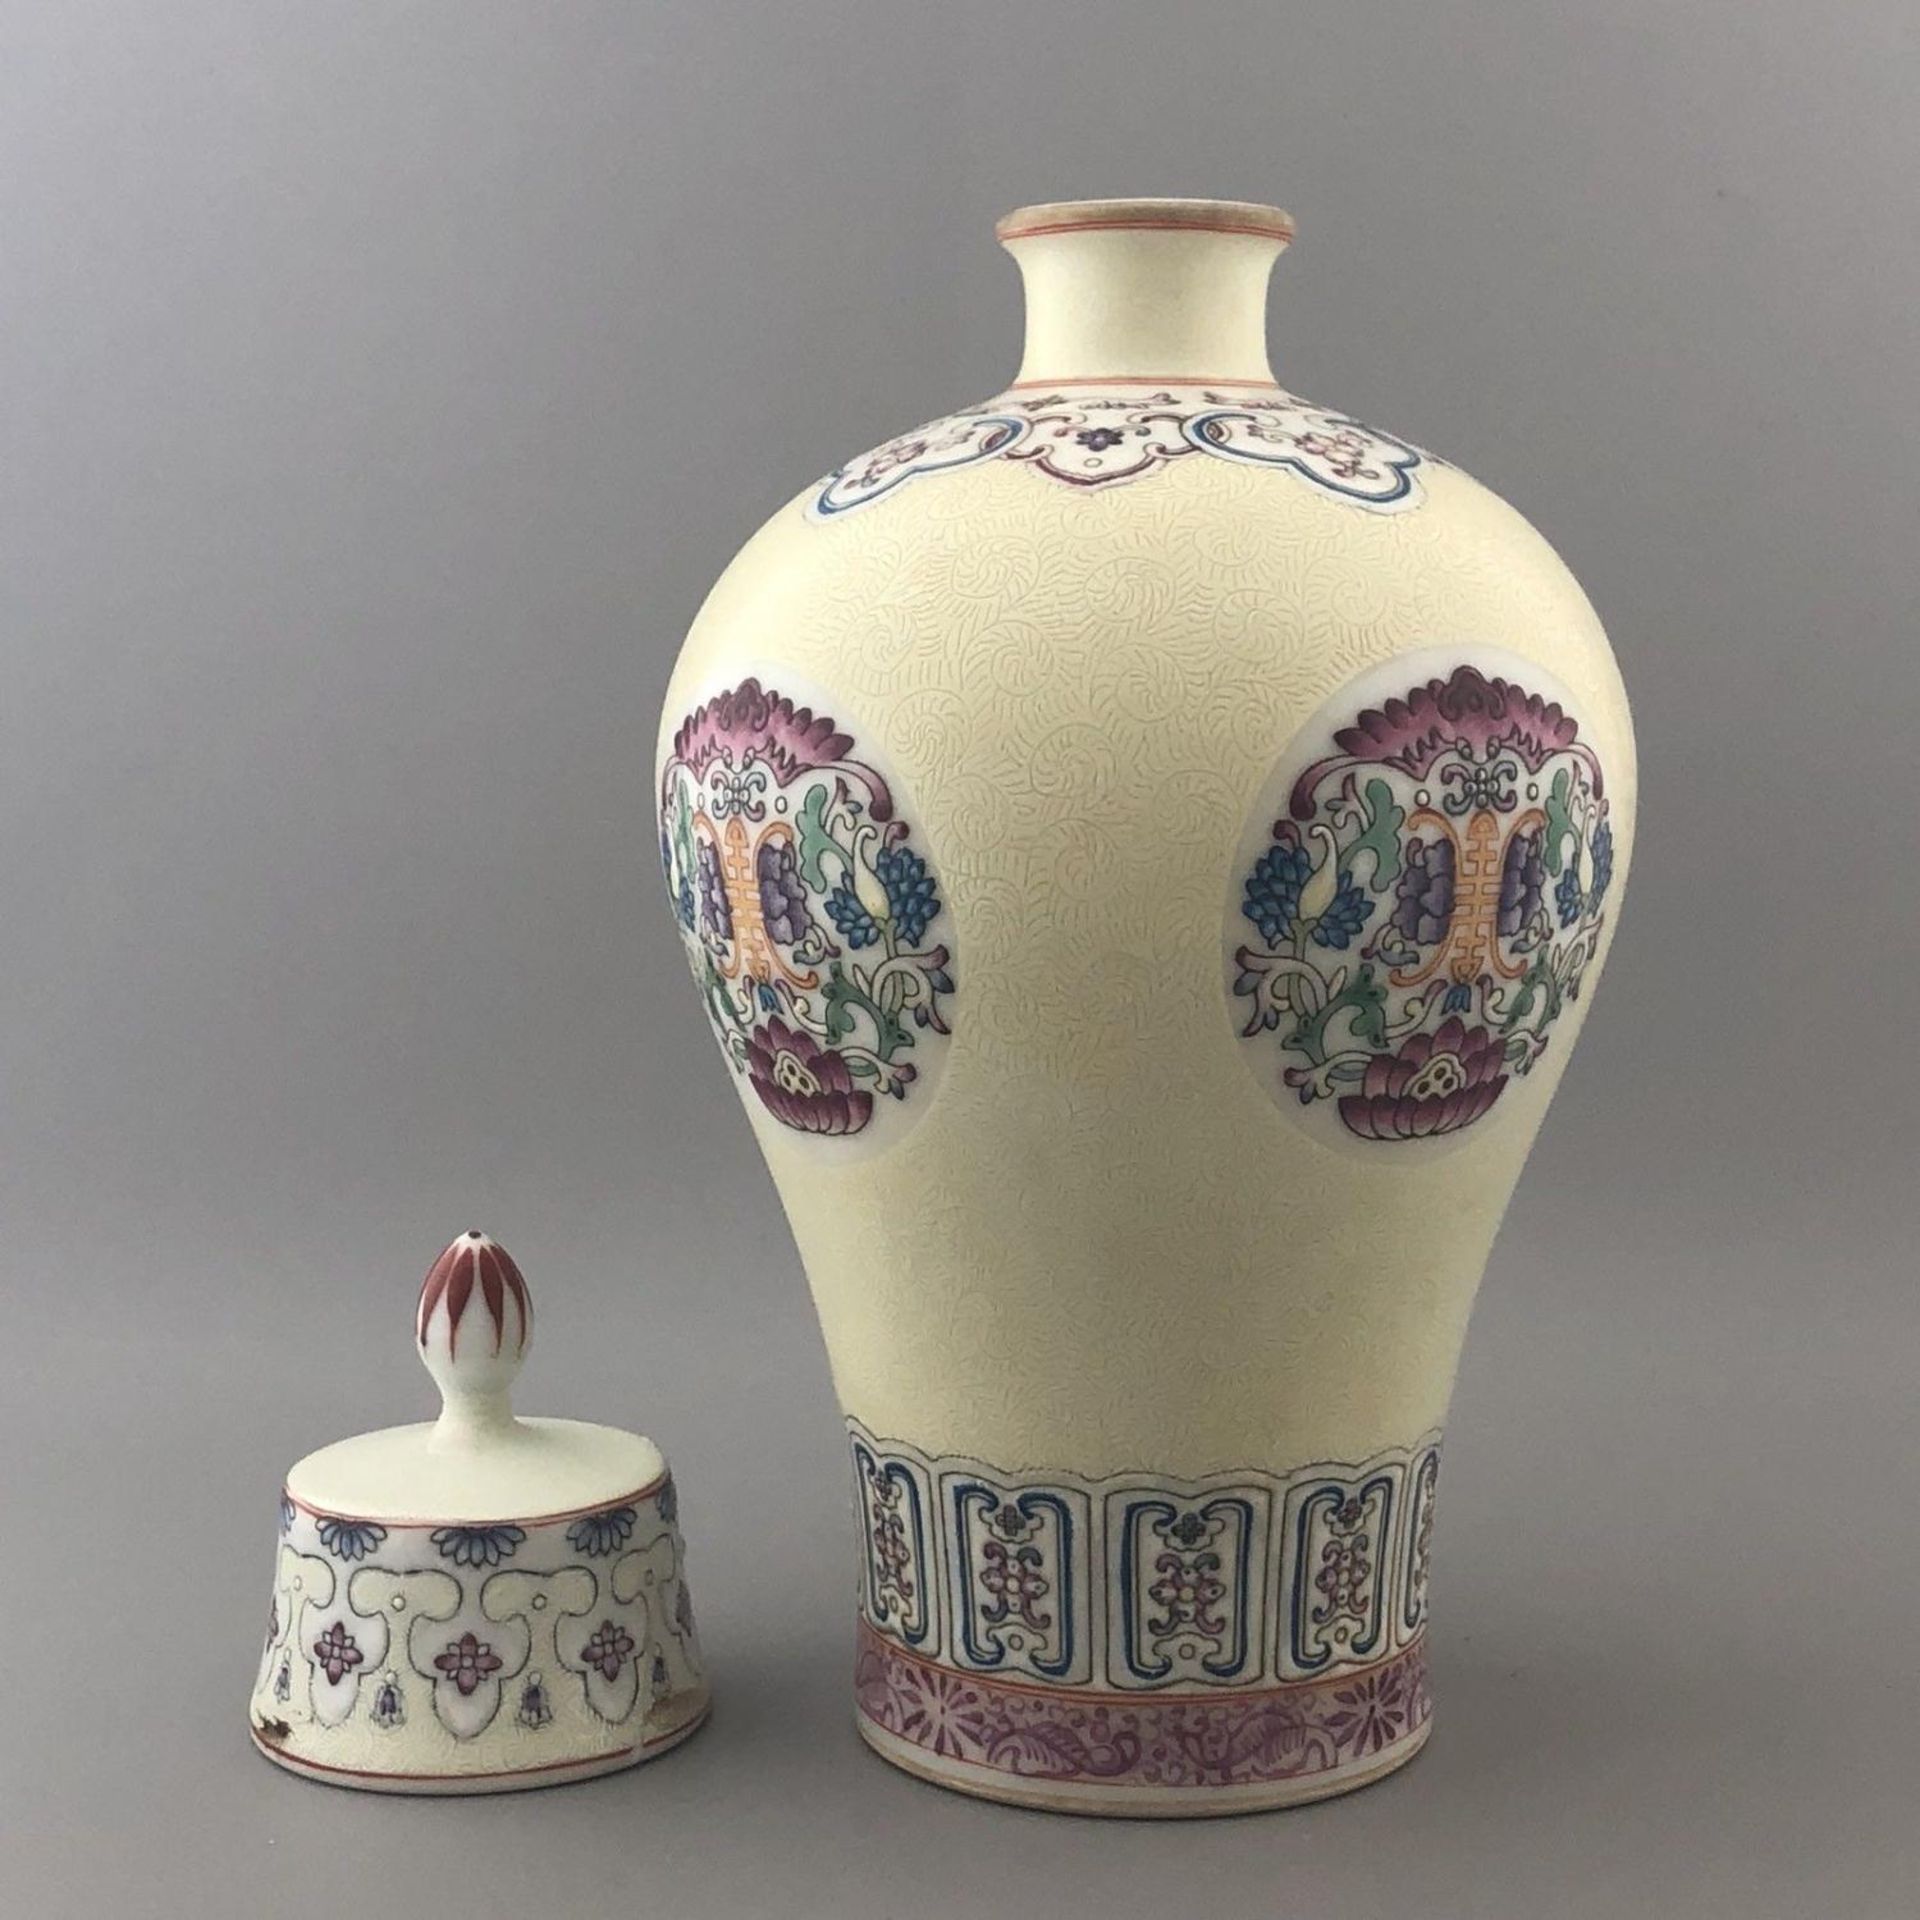 Antique Chinese Porcelain Vase Famille Rose Medallions on Yellow - Qianlong Mark